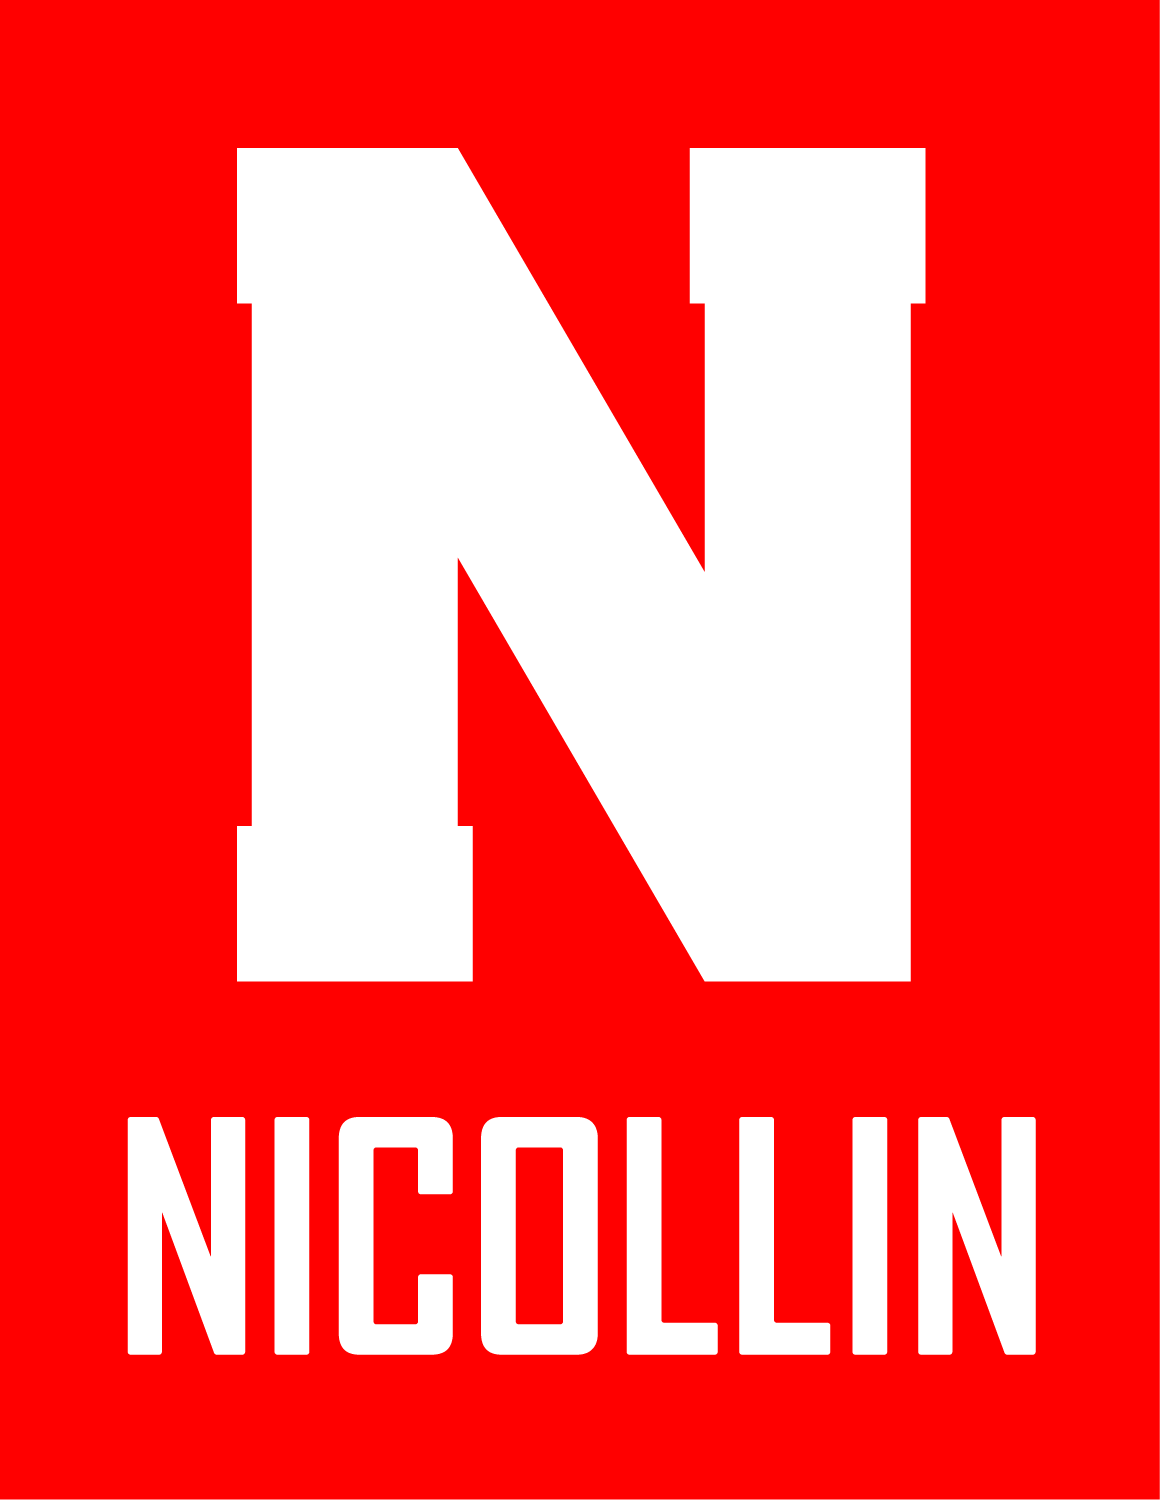 Nicollin, La Confiance se gagne sur le terrain